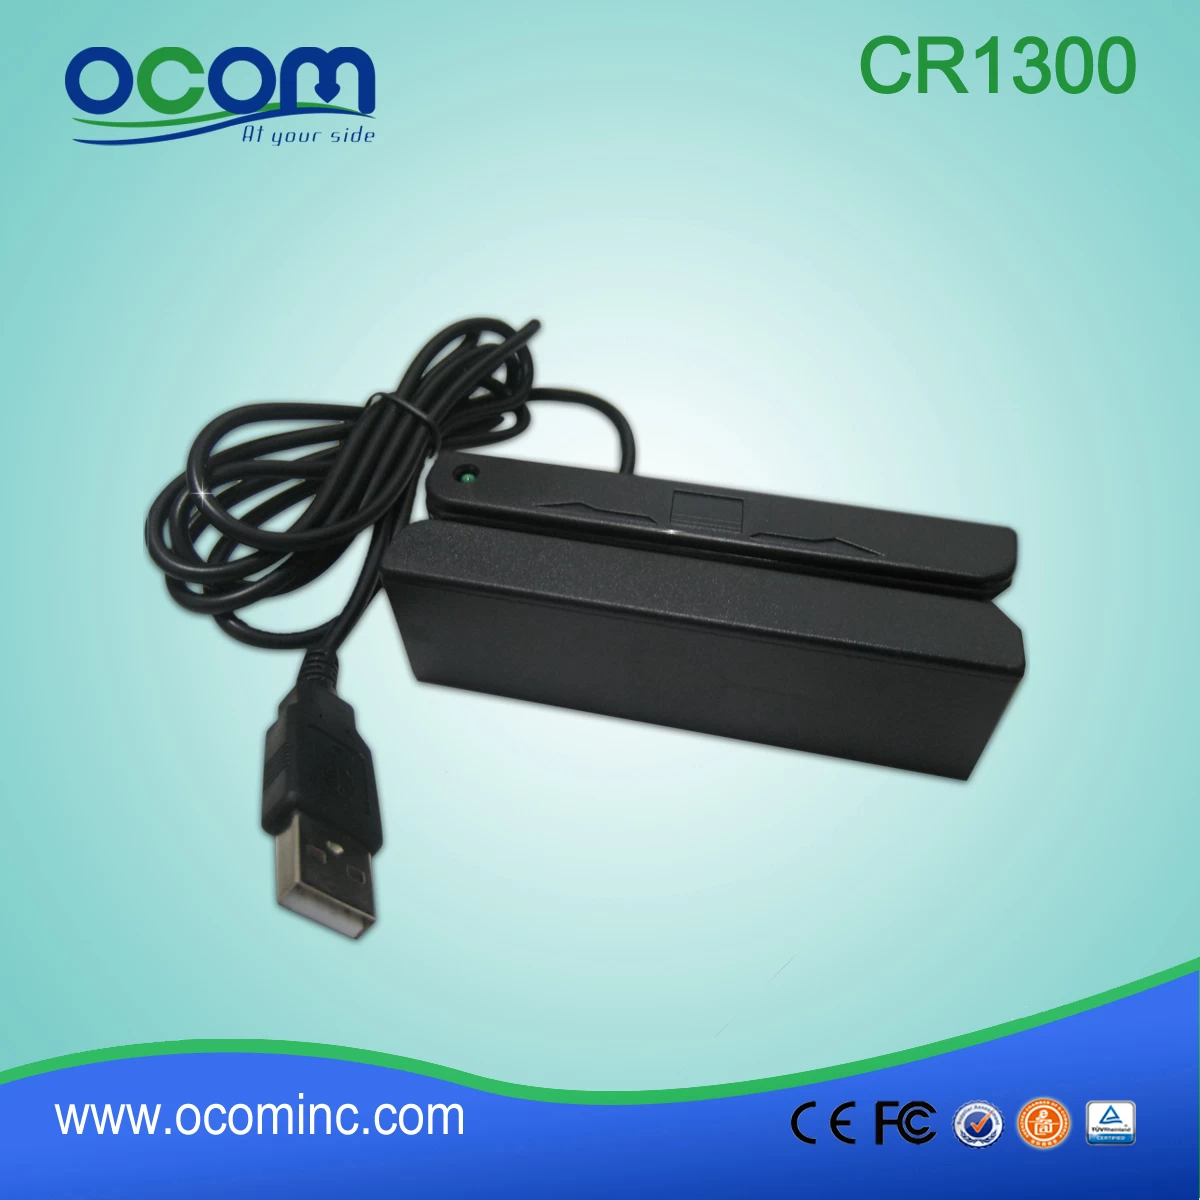 CR1300 3 tracks USB Magnetic Card Reader / Writer